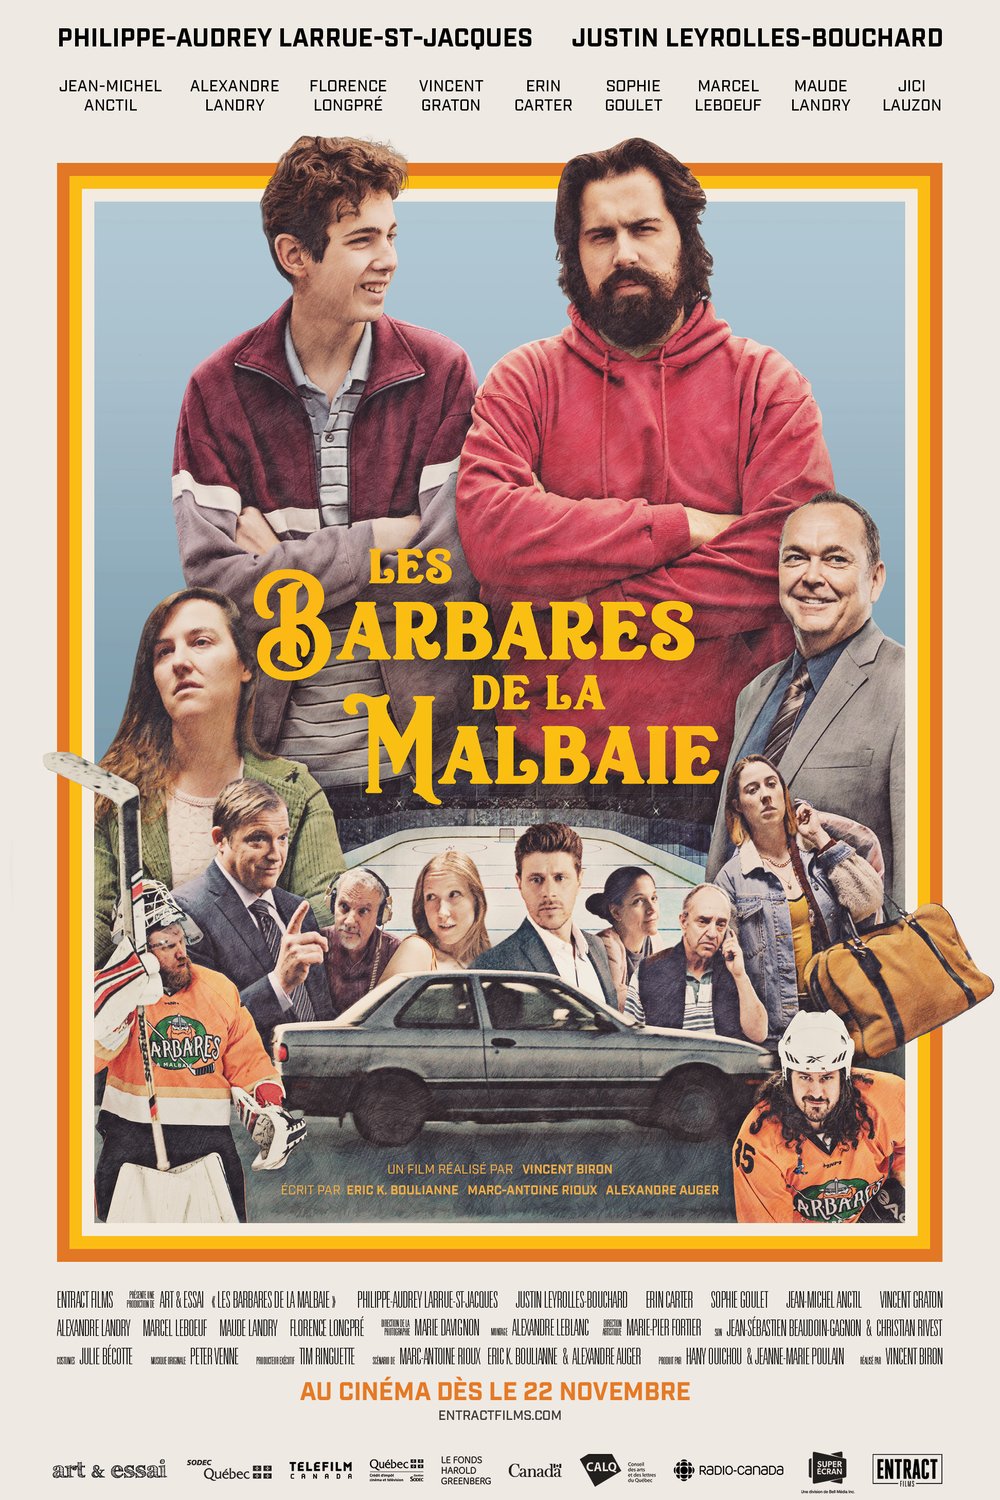 Poster of the movie Les Barbares de La Malbaie